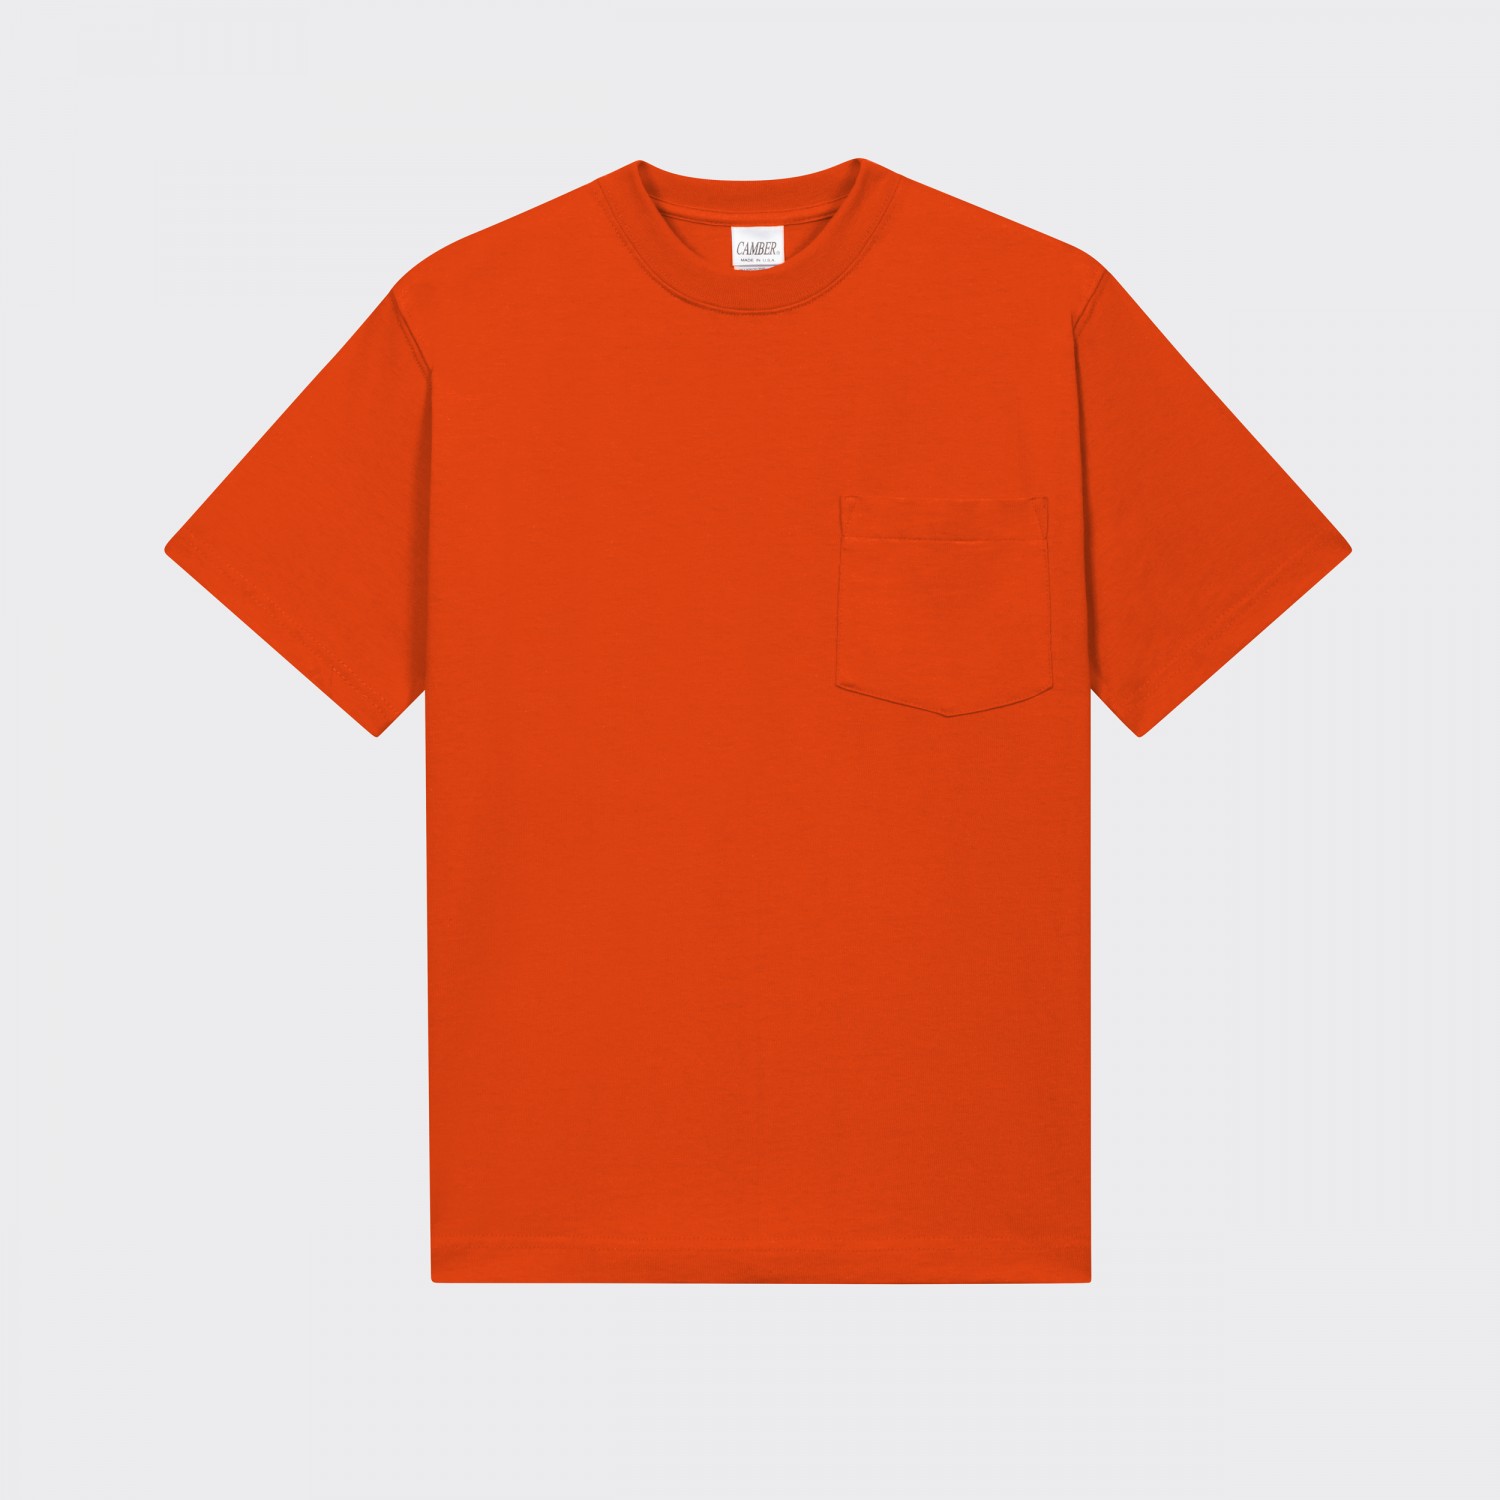 Camber USA : Pocket Orange T-shirt 